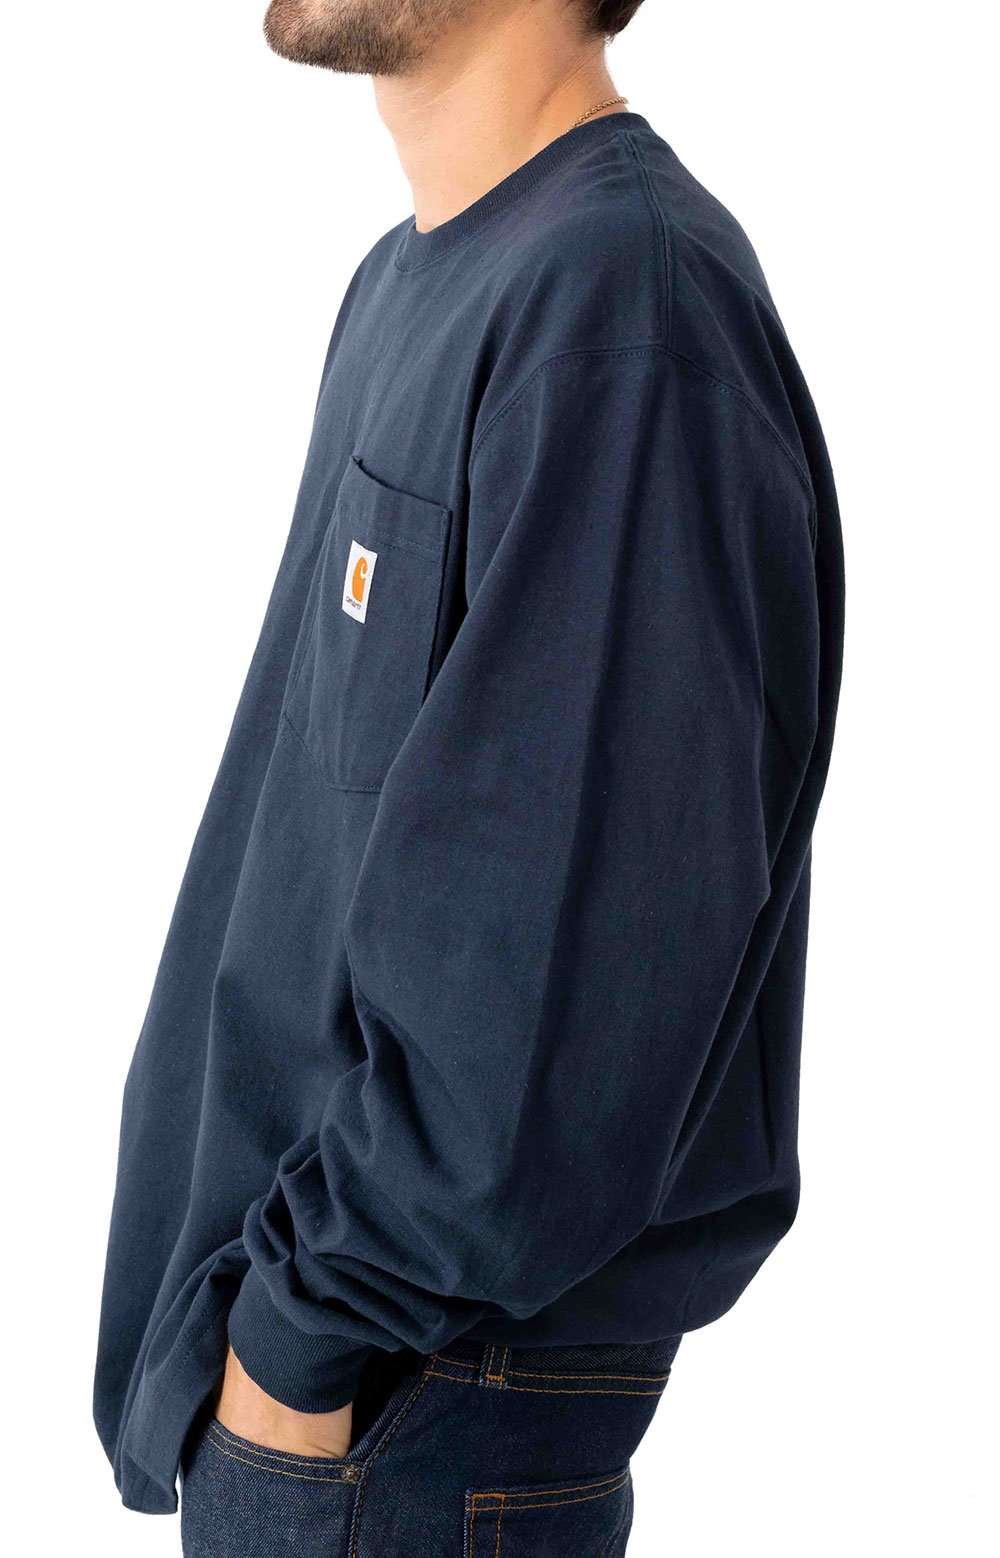 (K126) L/S Workwear Pocket T-Shirt - Navy